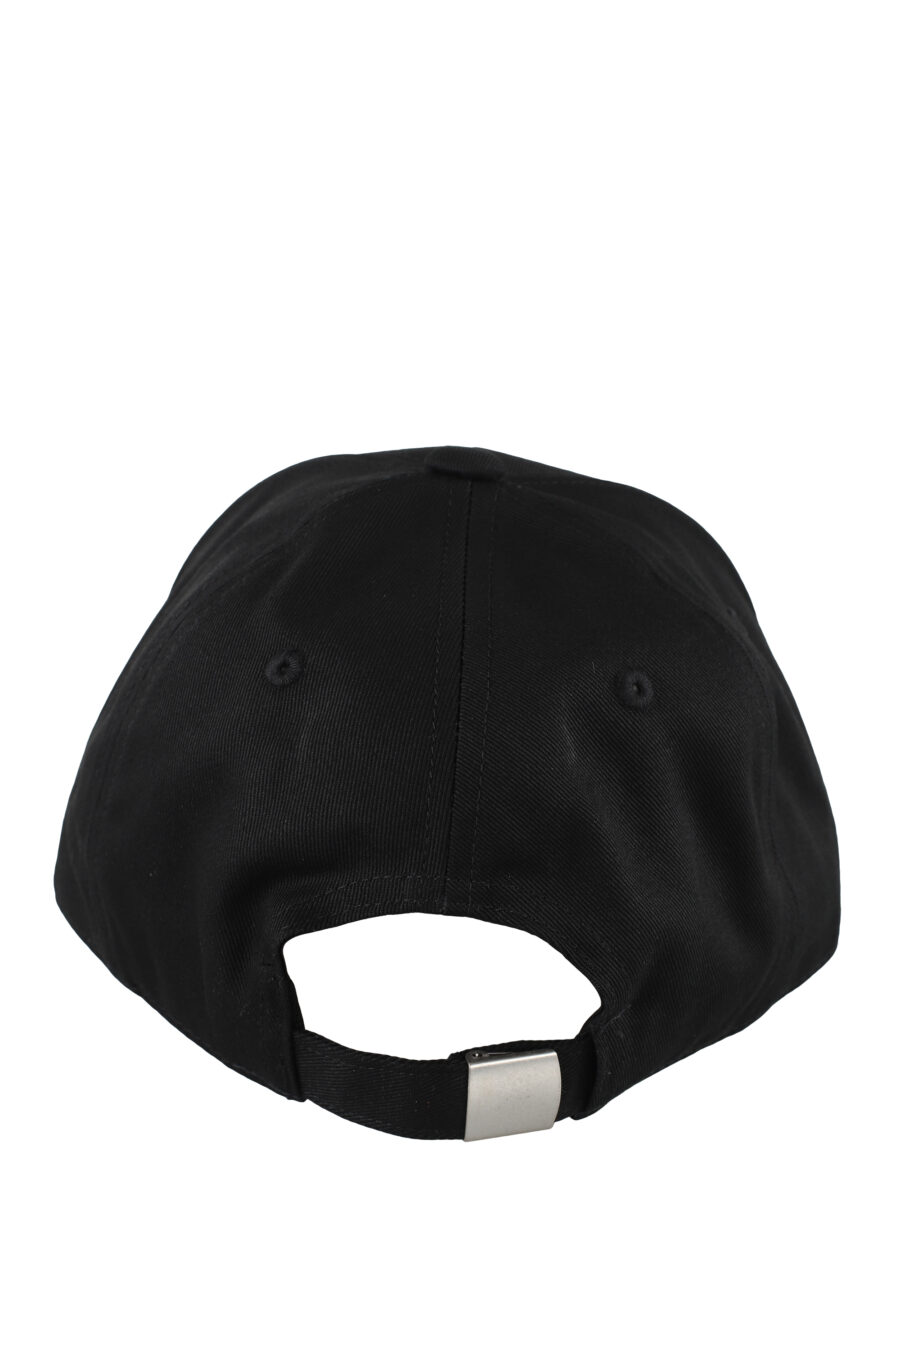 Gorra negra con logo mini "lux identity" blanco - IMG 5156